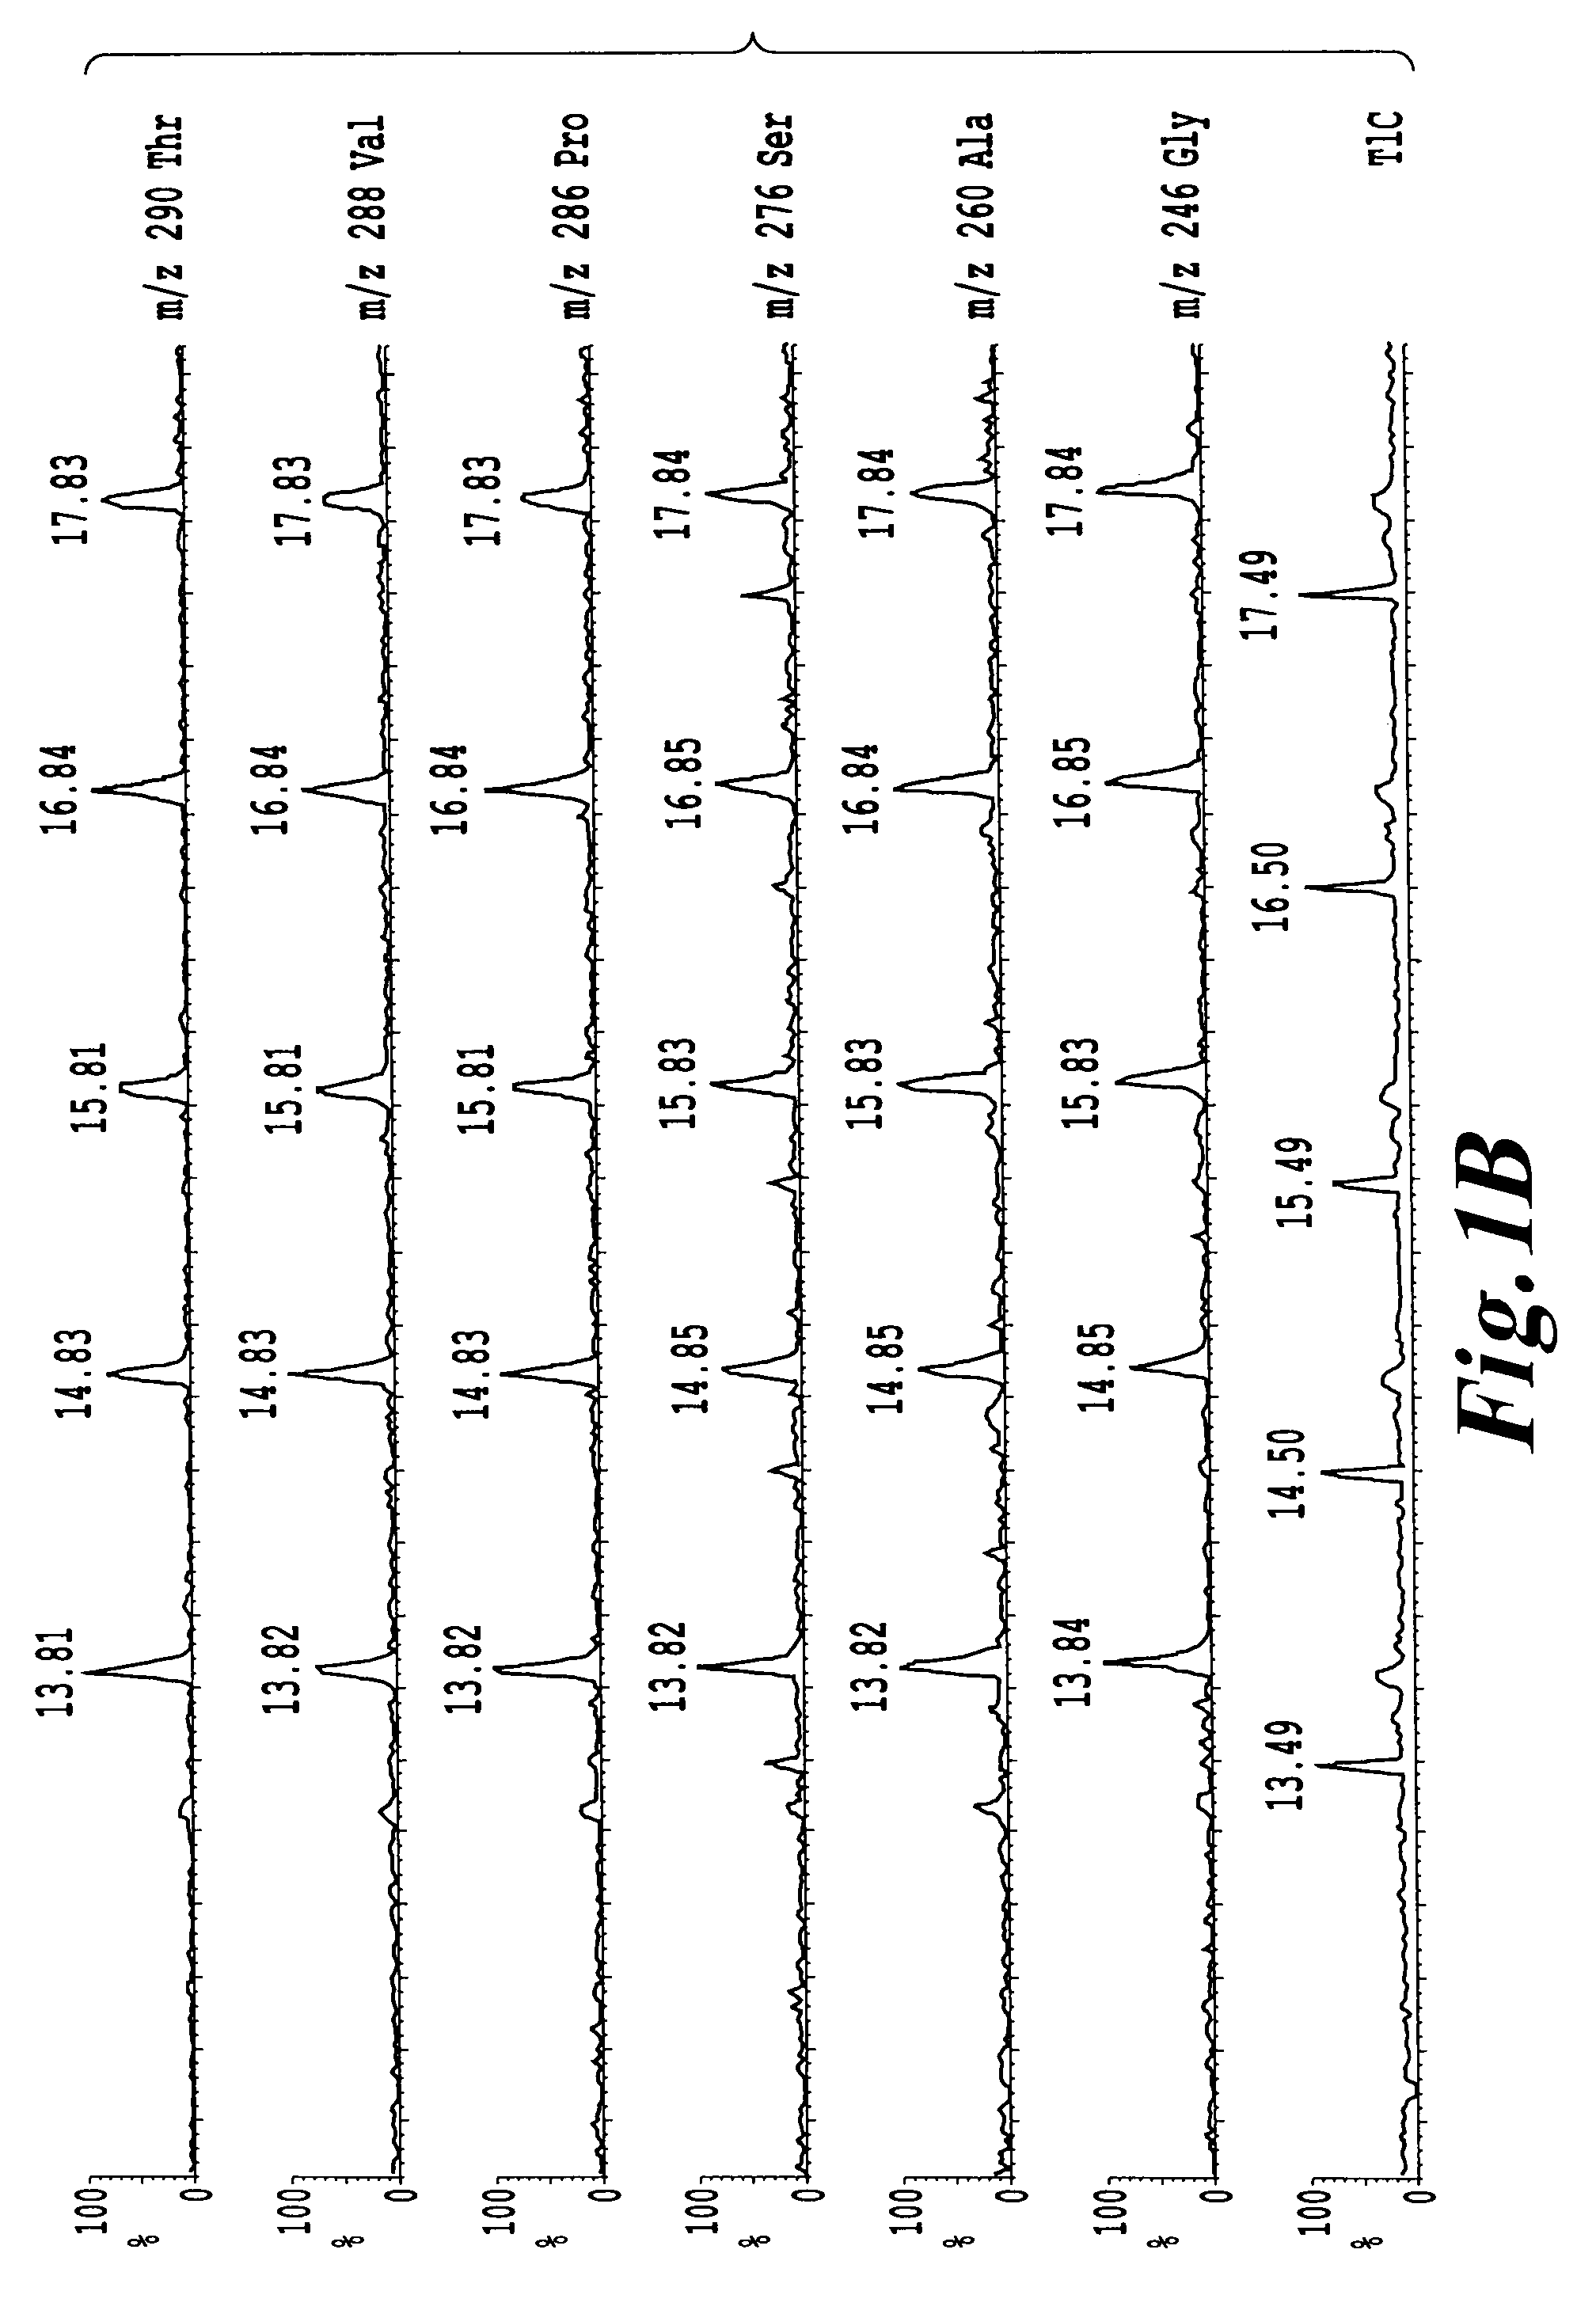 Analysis method of amino acid using mass spectrometer